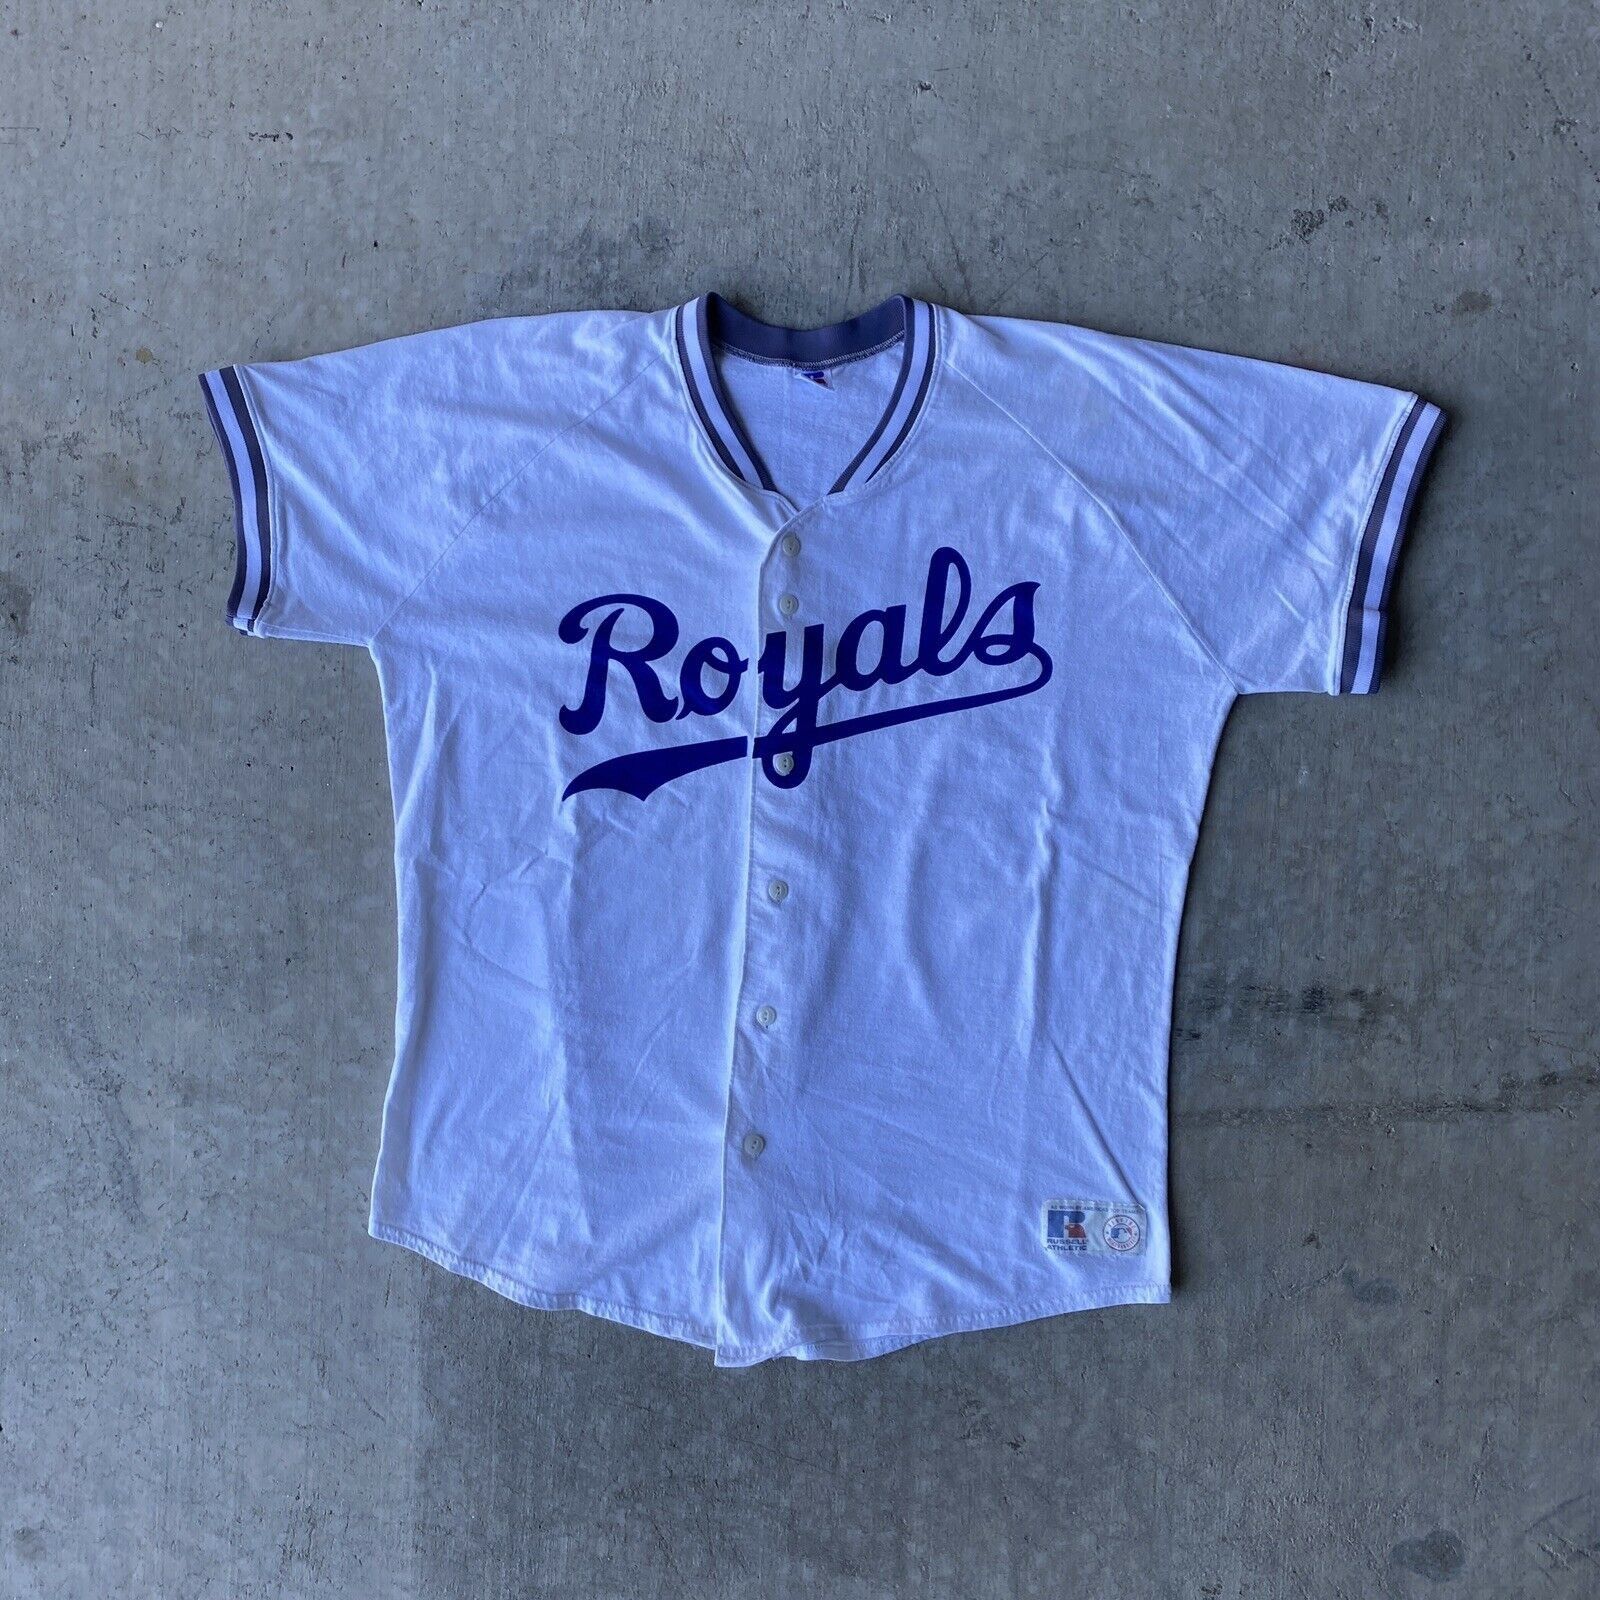 Vintage Kansas City Royal MLB Jersey Russell Athletic XL 